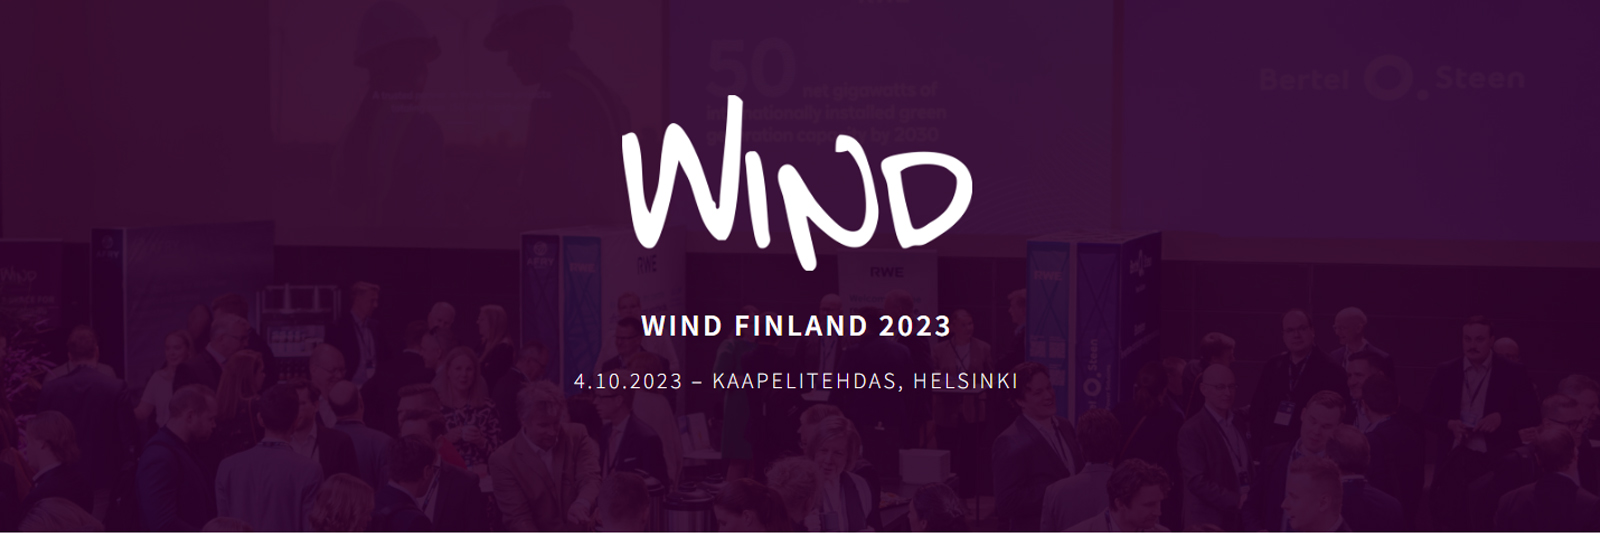 Wind Finland 2023 1600px